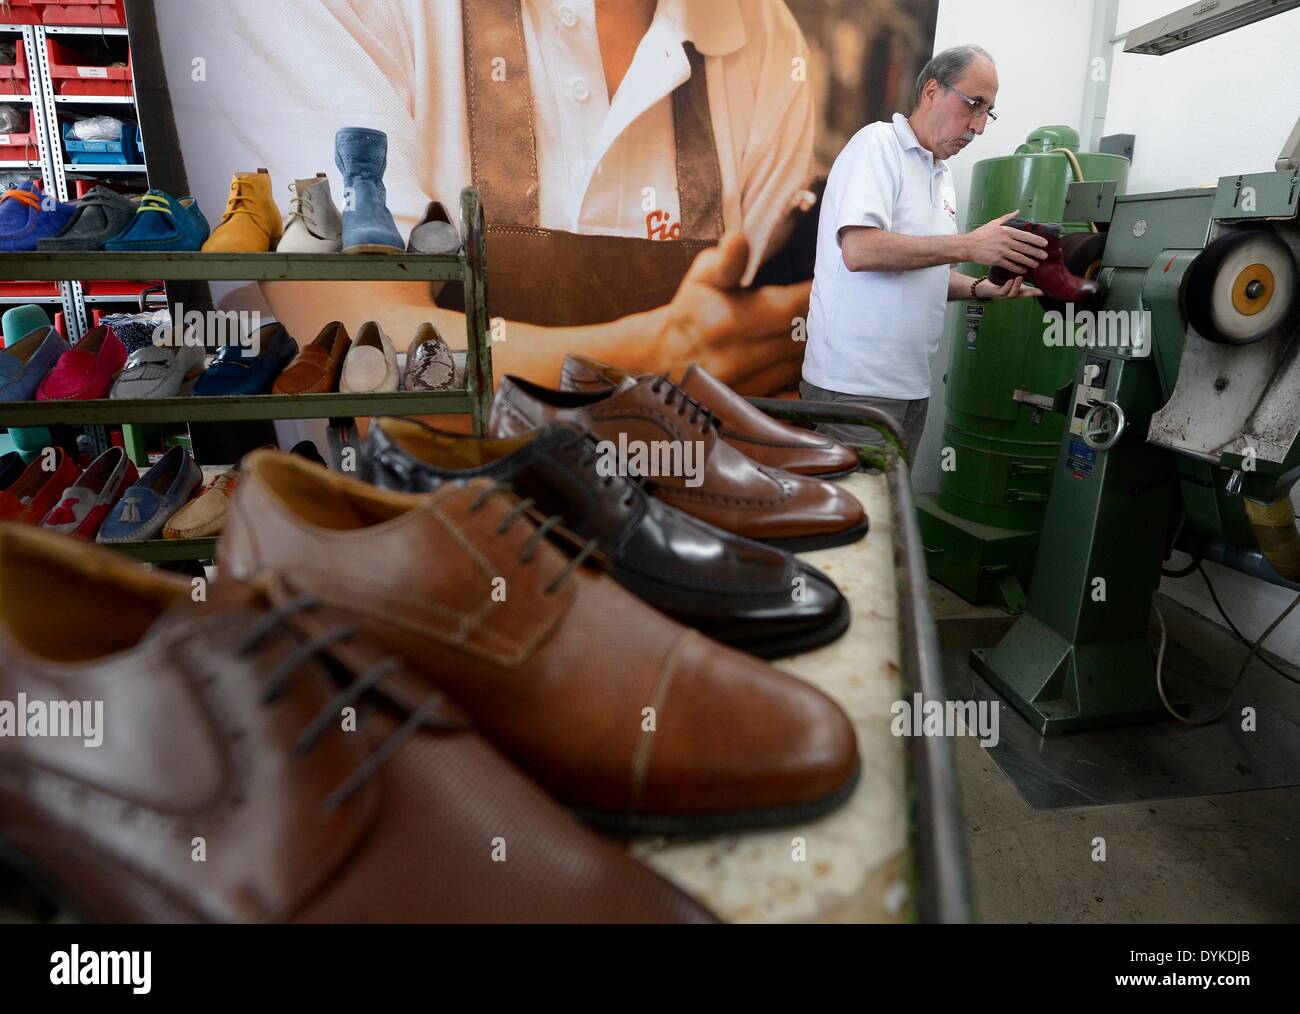 Walheim, Germania. 15 apr 2014. Un dipendente del tedesco della calzatura manufacturing company Sioux lucida scarpe in Walheim, Germania, 15 aprile 2014. Foto: Daniel Maurer/dpa/Alamy Live News Foto Stock